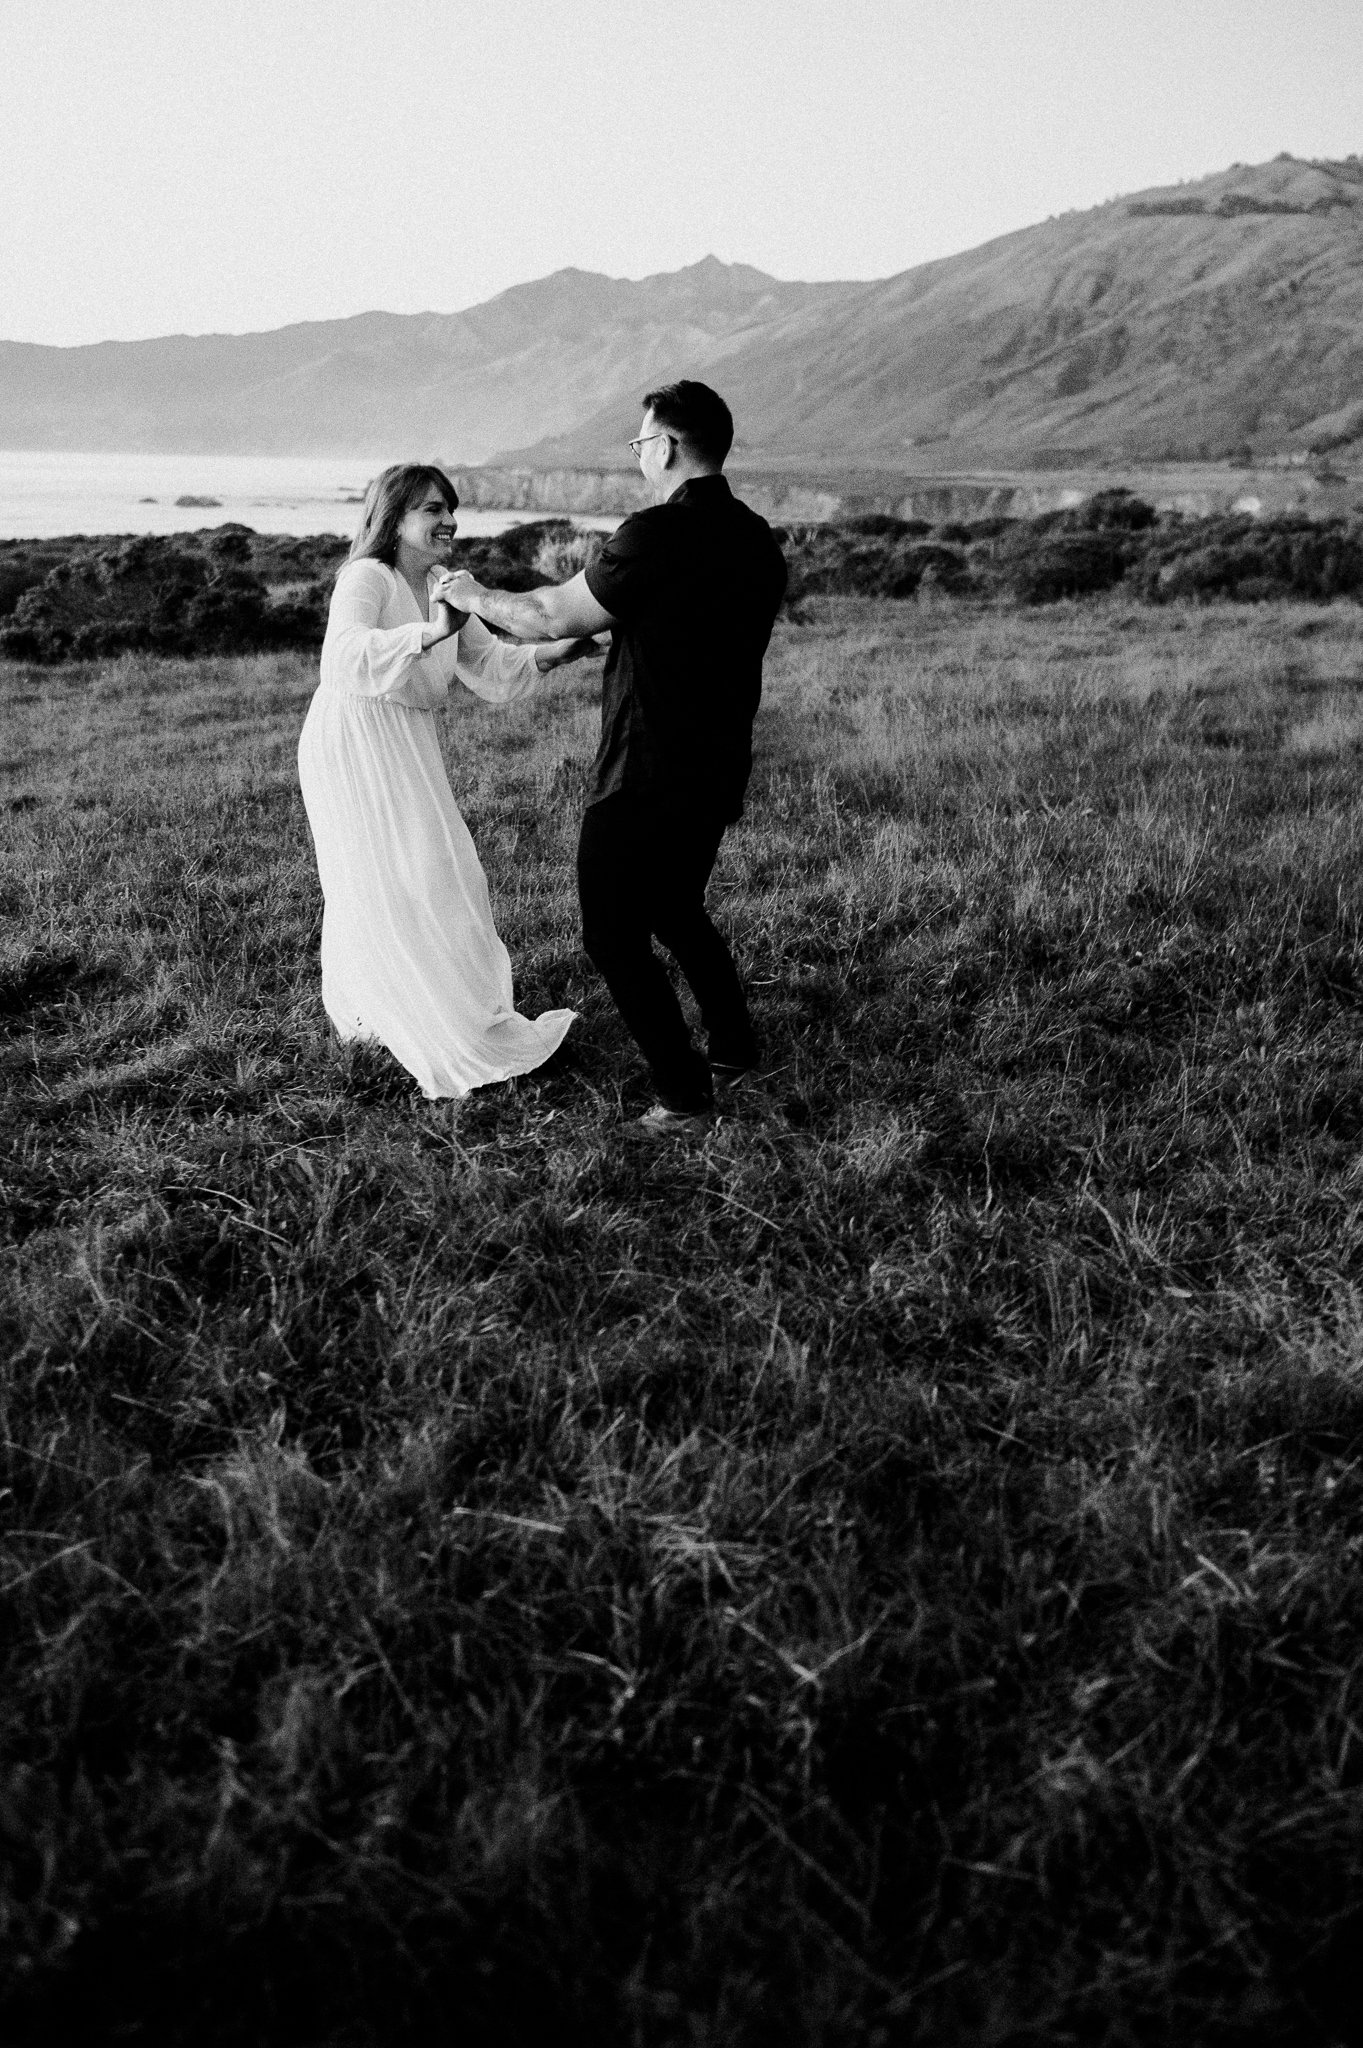 Couple-dancing-in-Meadow-Big-Sur-adventure-photography